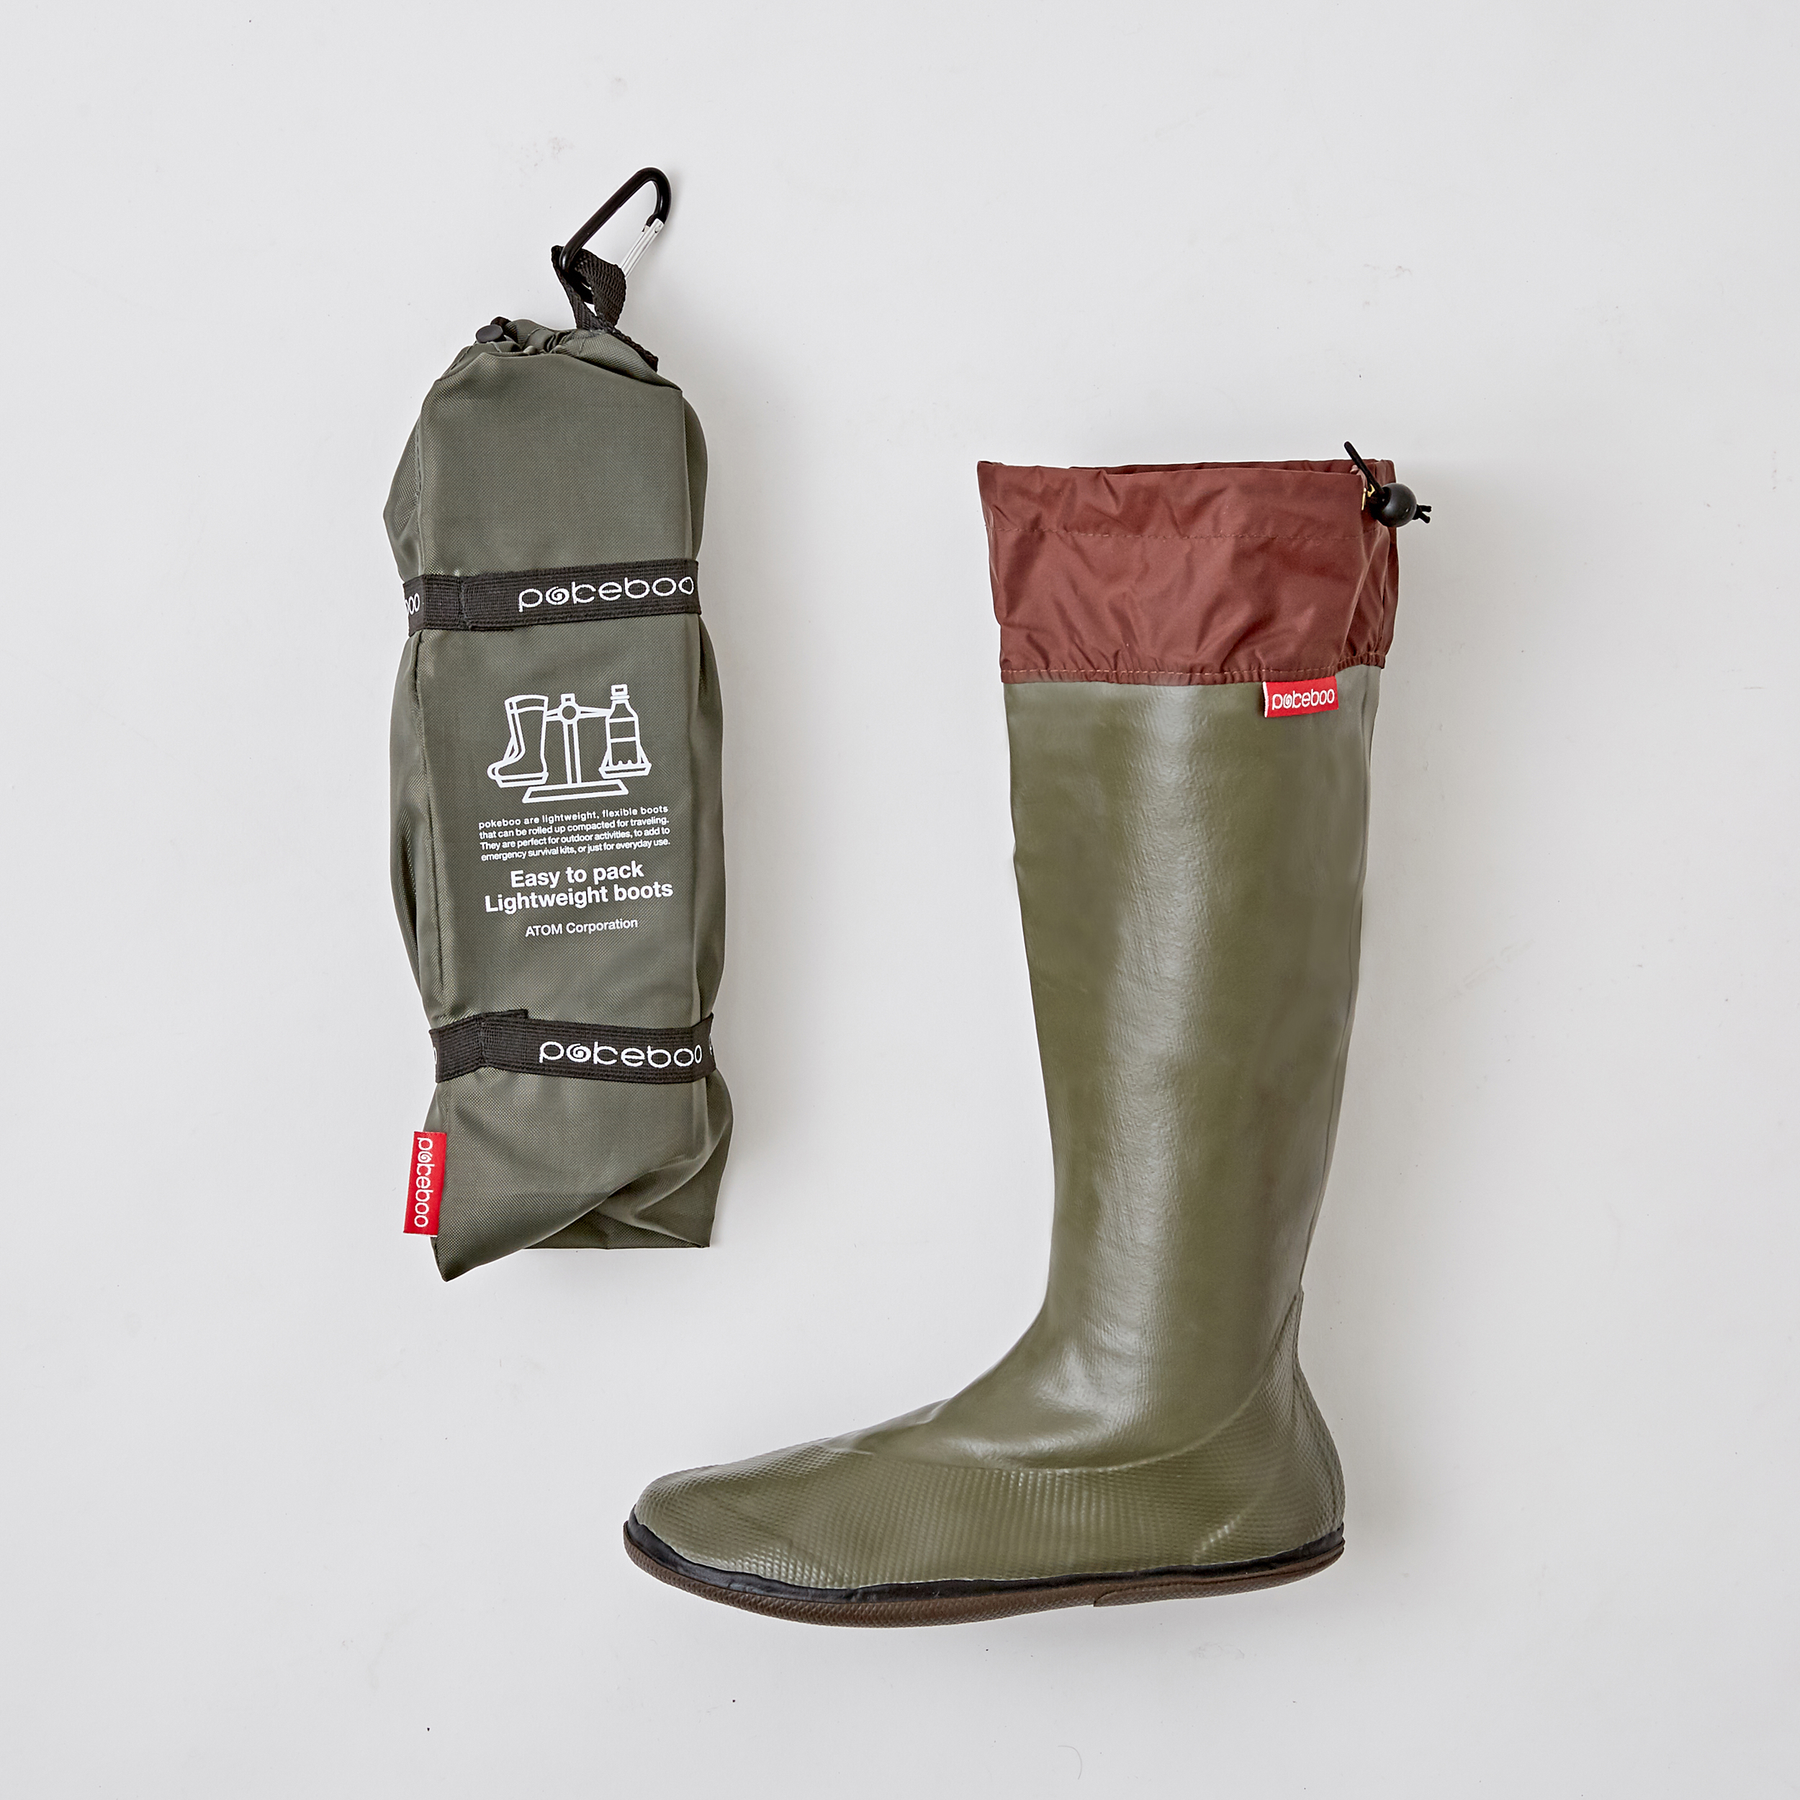 Pokeboo, Packable Rubber Rain Boots - Khaki, SS